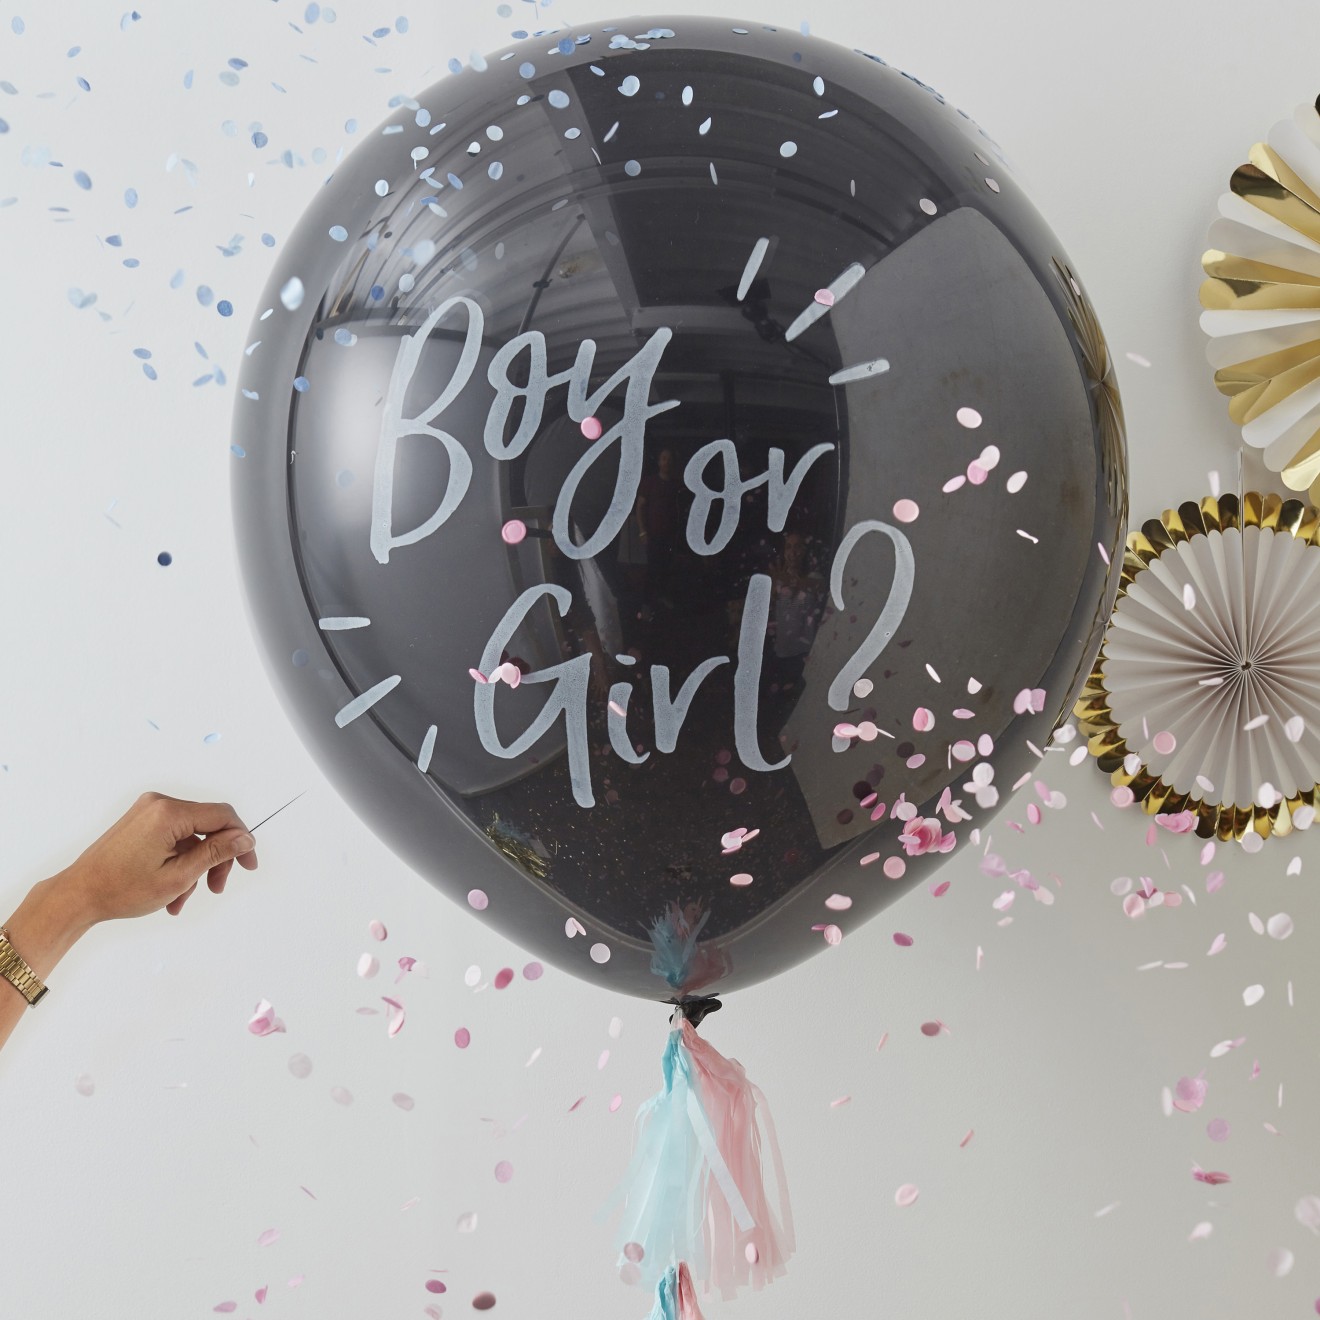 1 Balloons - 36" Confetti - Gender Reveal